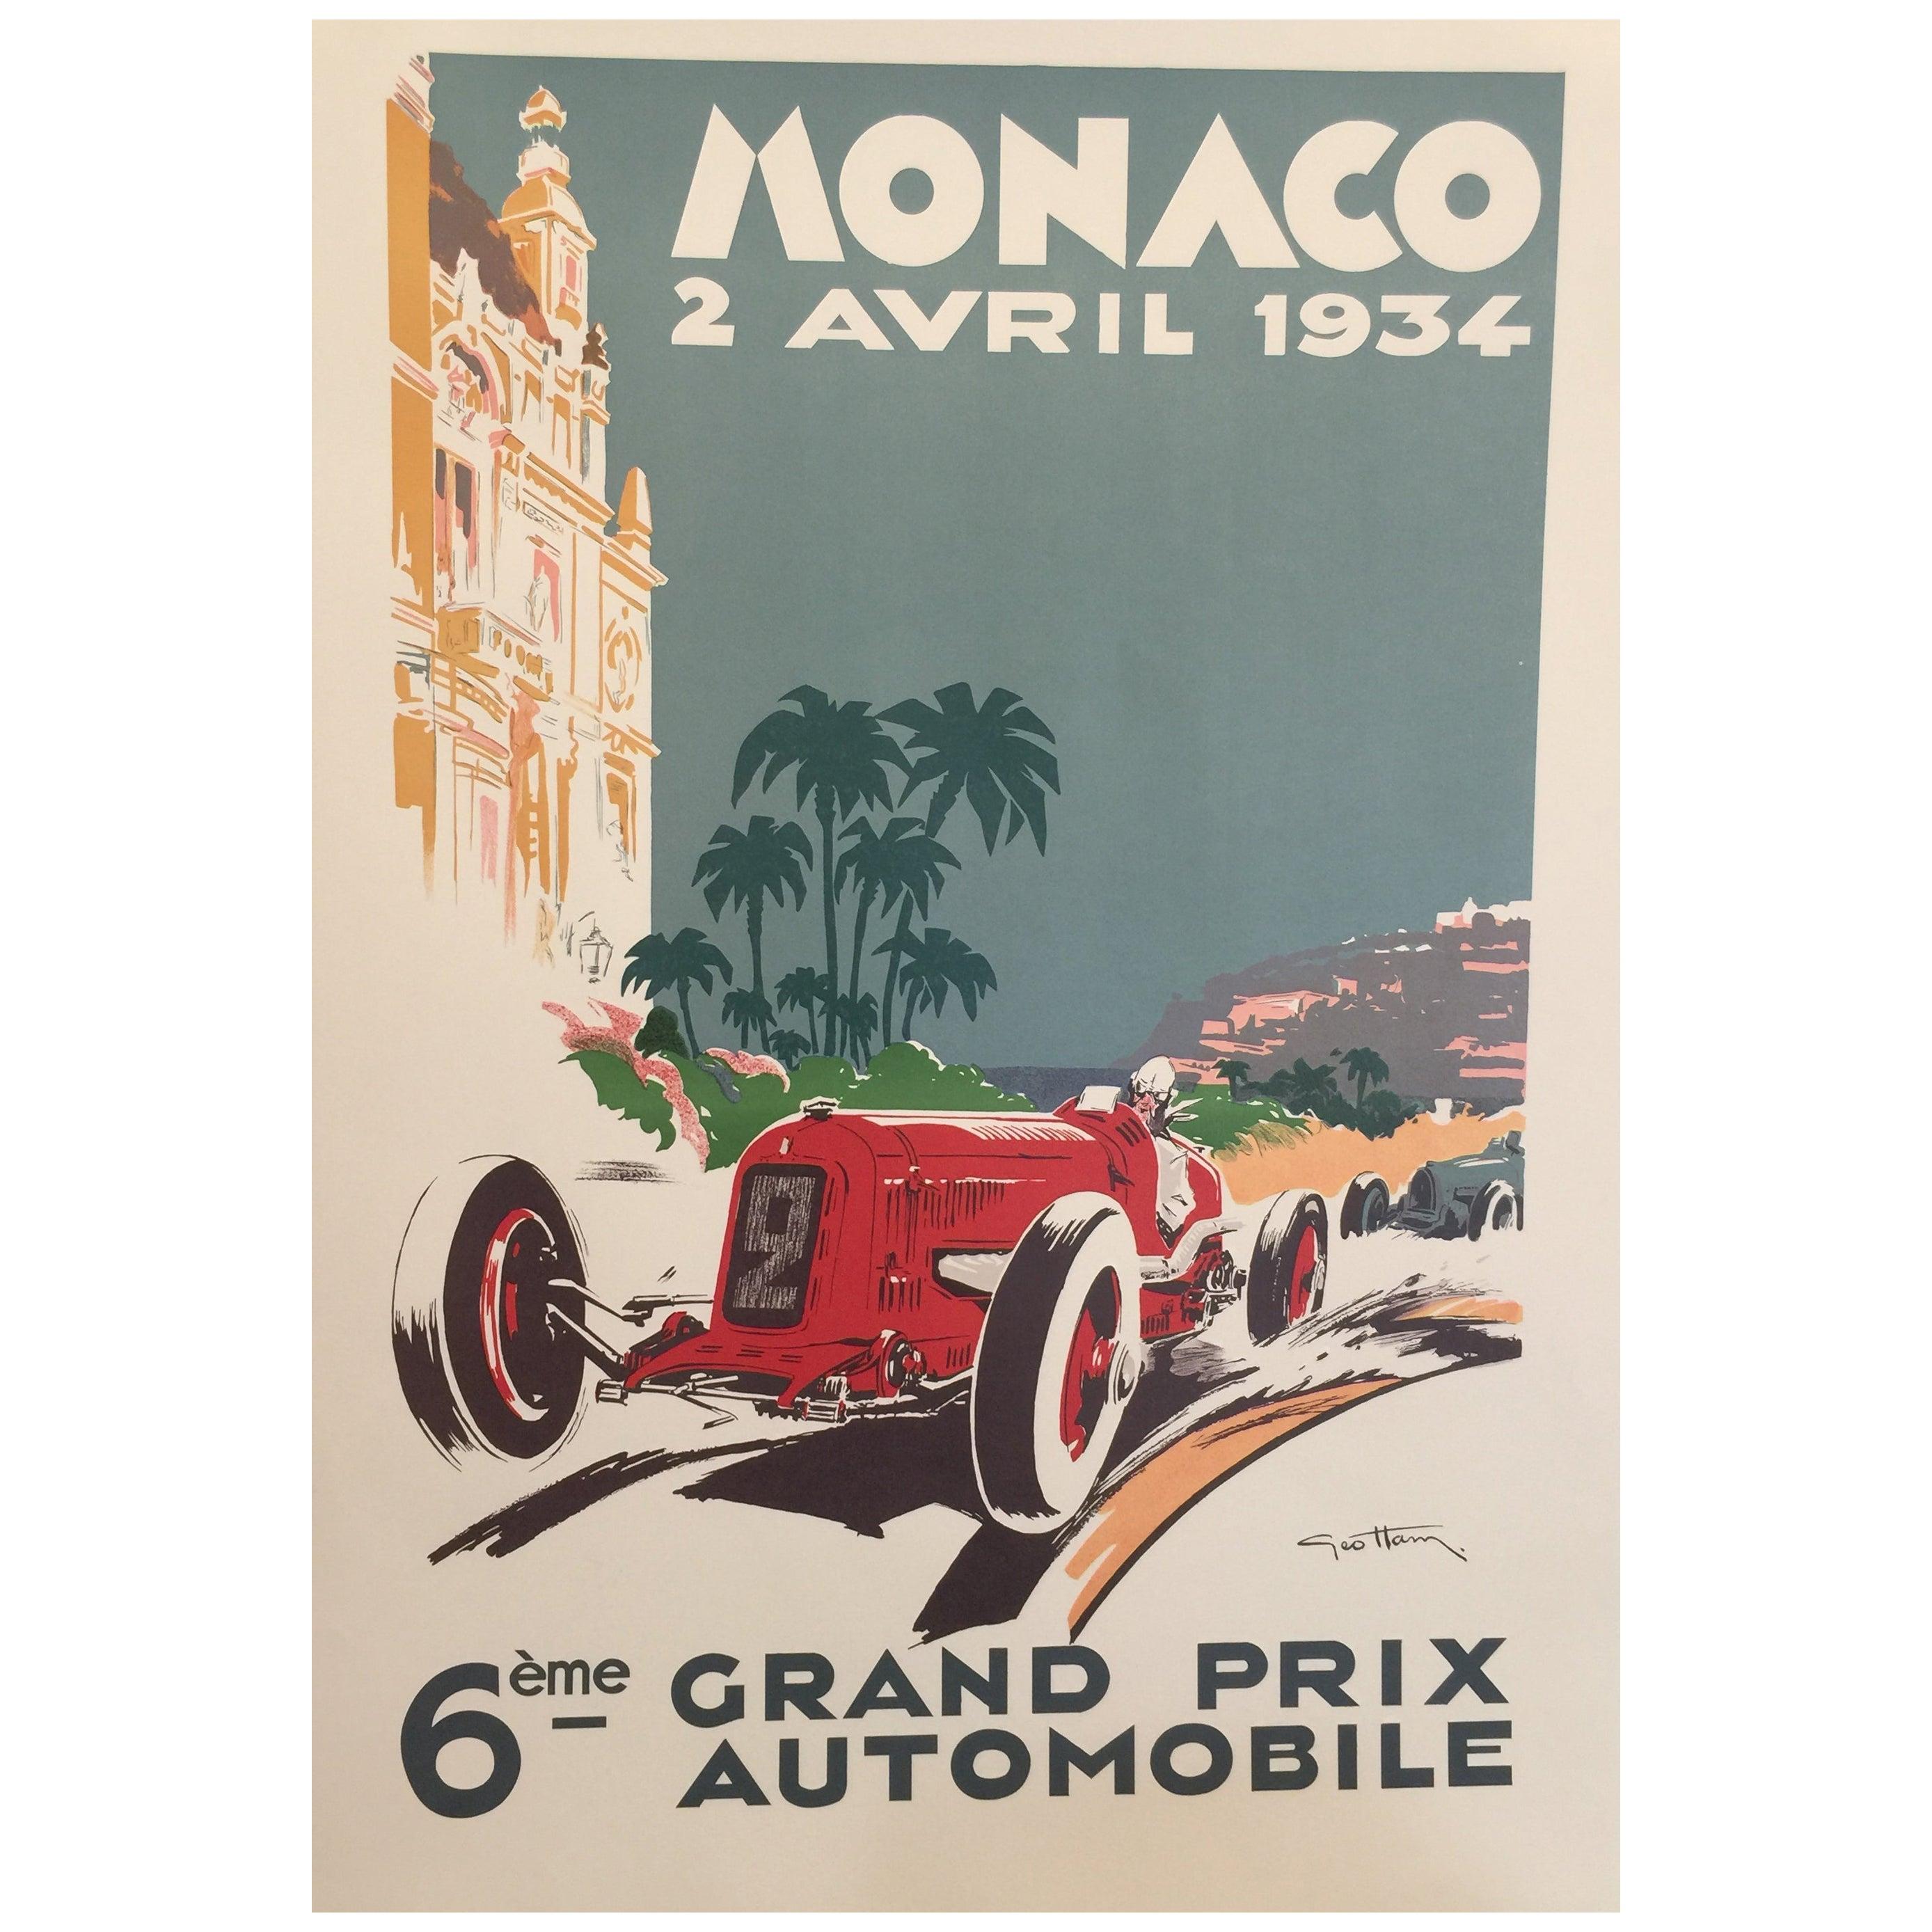 Authorised Edition Vintage Monaco Grand Prix Car Poster by Geo Ham 1934